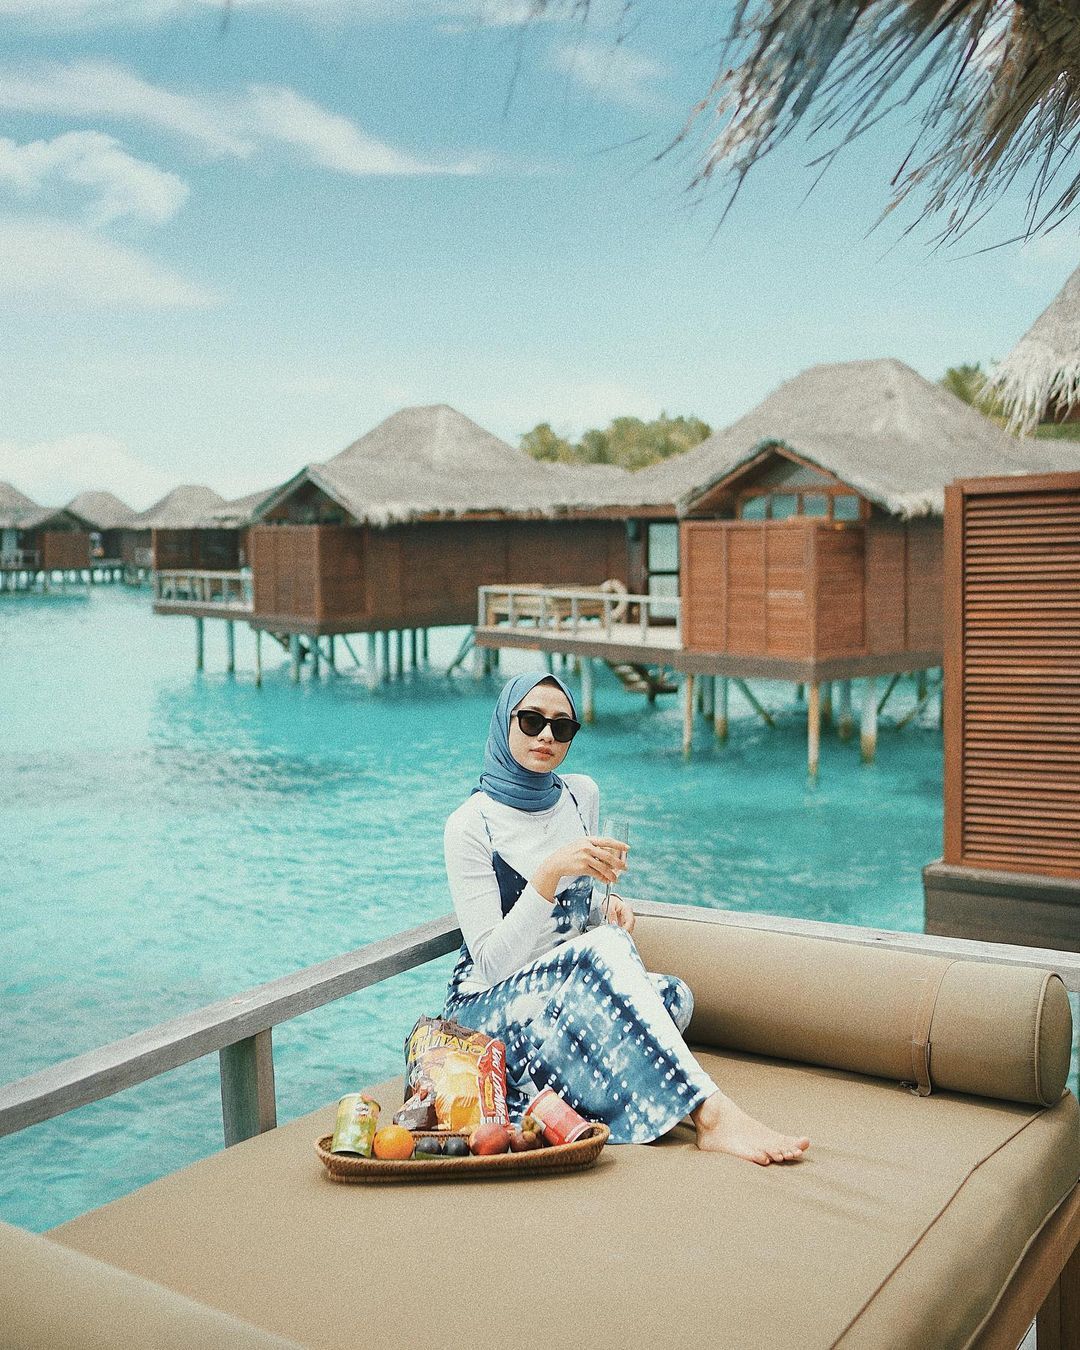 Ide Mix & Match Outfit Hijab ke Pantai yang Simpel dan Modis